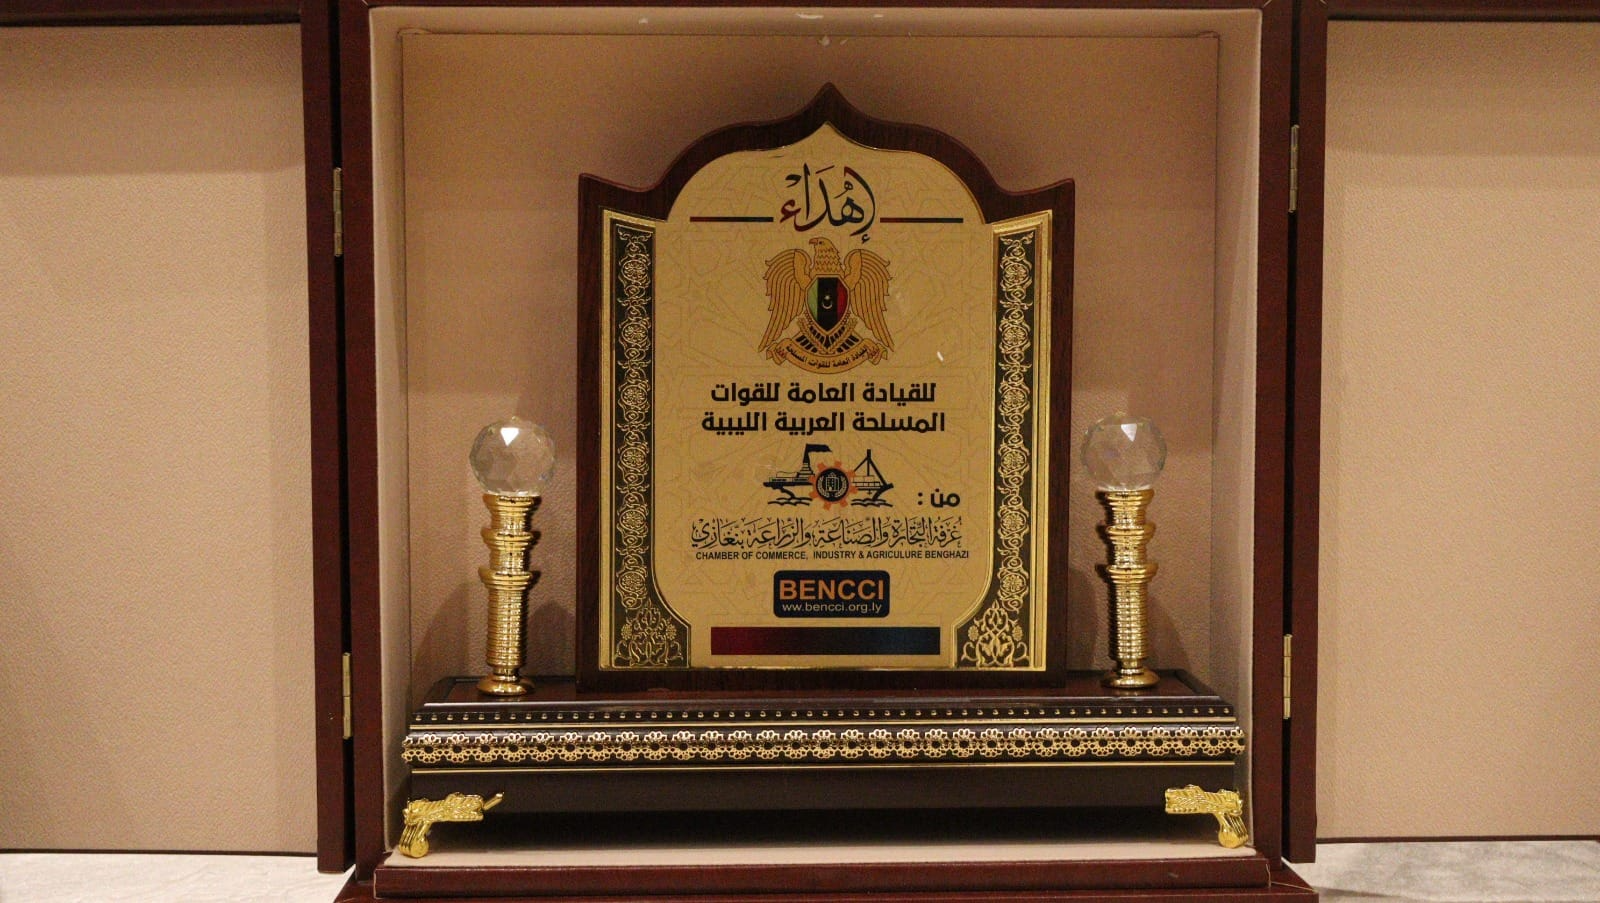 May be an image of ‎grandfather clock and ‎text that says '‎لهُدَاءُ للقيادة العامة للقوات المسلحة العربية الليبية‎'‎‎